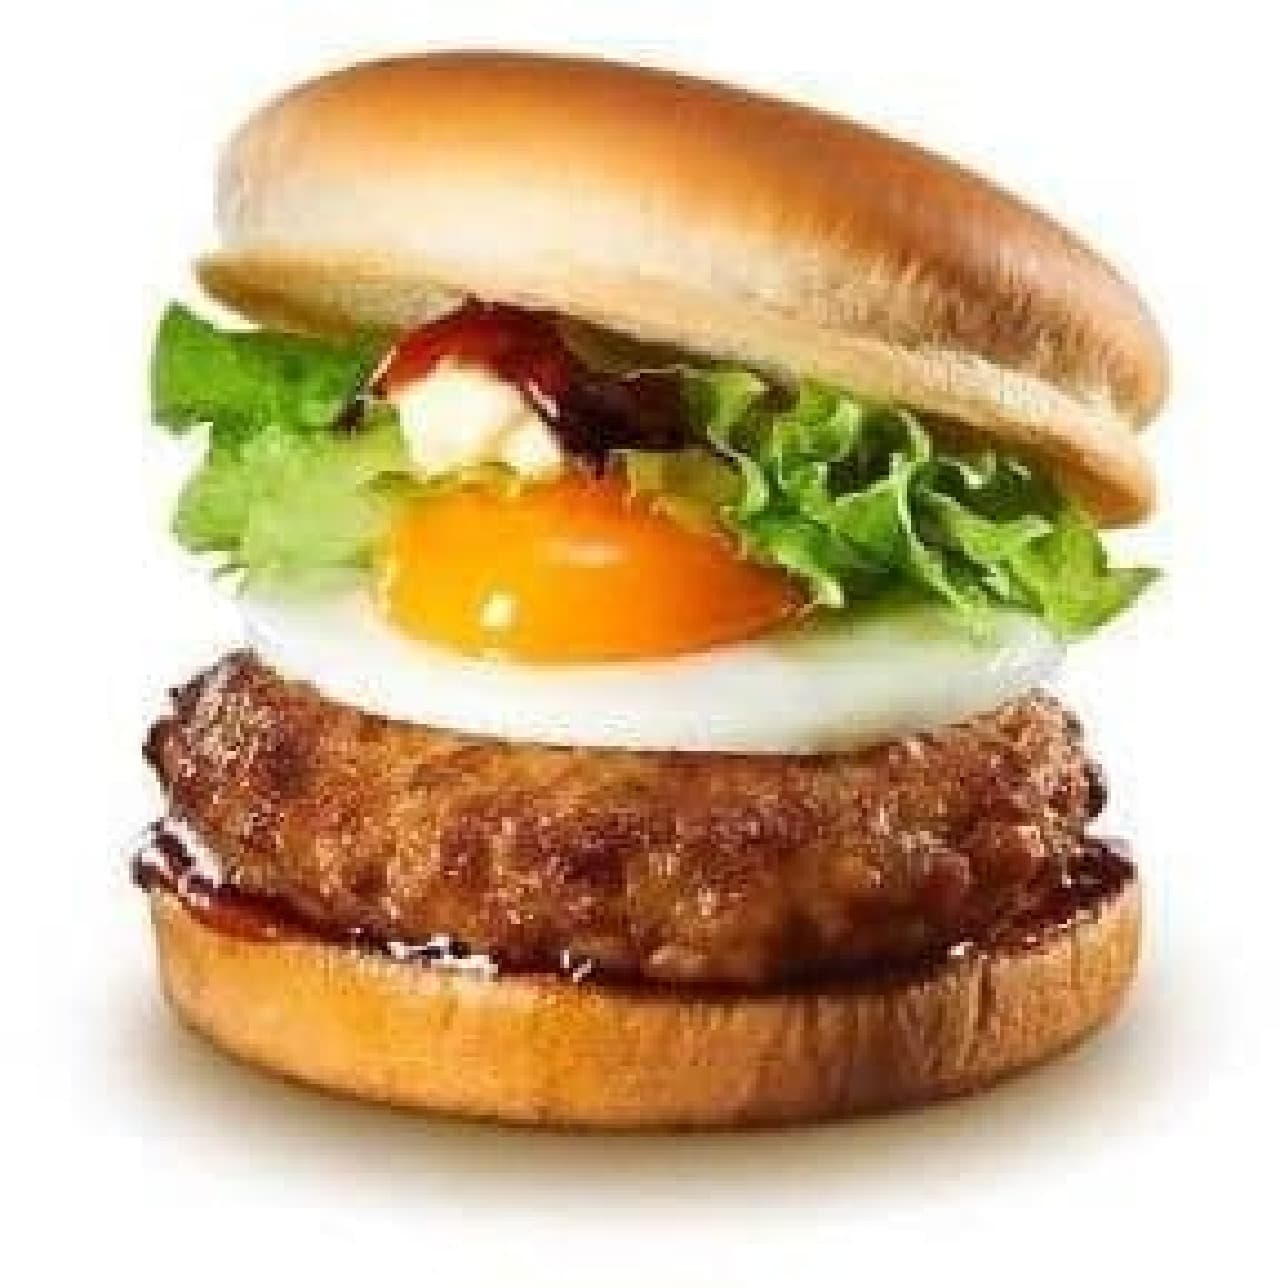 Lotteria "Half-boiled moon-viewing thick burger"